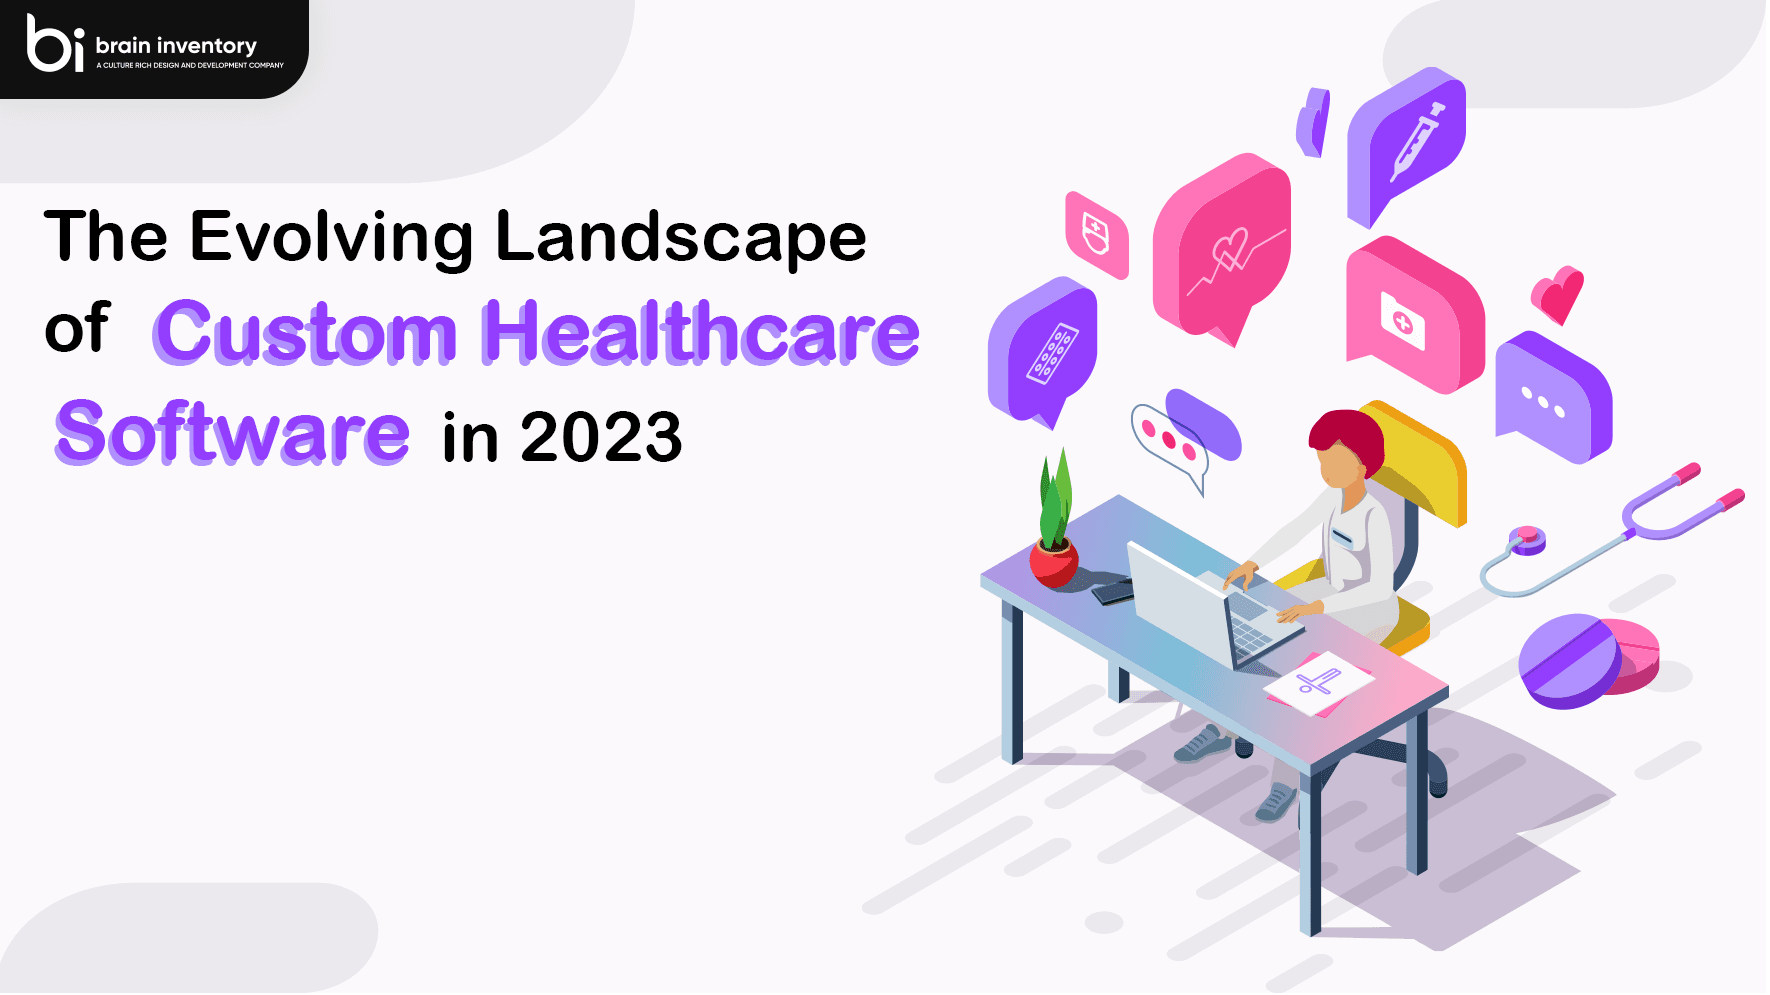 The Evolving Landscape of Custom Healthcare Software in 2023